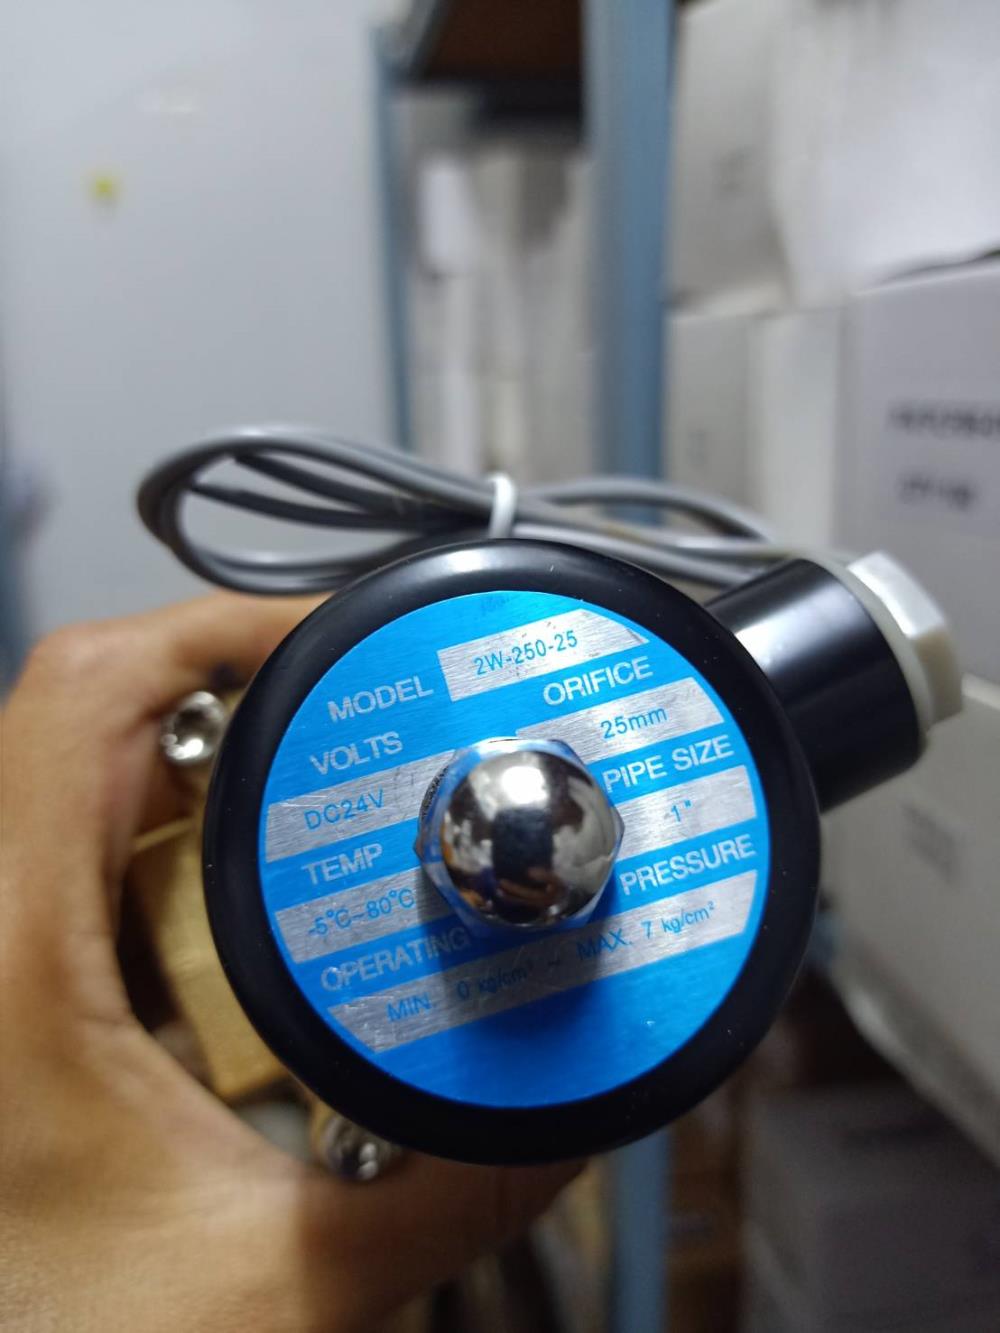 2W-250-25-220V Semax(emc)Solenoid valve 2/2 ทองเหลือง size 1" โซลินอยด์วาล์ว pressure 0-8bar(kg/cm2) 120psi ไฟ 220V ใช้กับ น้ำ ลม น้ำมัน ส่งฟรีทั่วประเทศ,2W-250-25-220V Semax(emc)Solenoid valve 2/2 ทองเหลือง size 1" ,2W-250-25-220V Semax(emc)Solenoid valve 2/2 ทองเหลือง size 1" ไฟ 220V,Semax (EMC) วาล์วแบบ 2/2 ทองเหลือง,Energy and Environment/Water Treatment